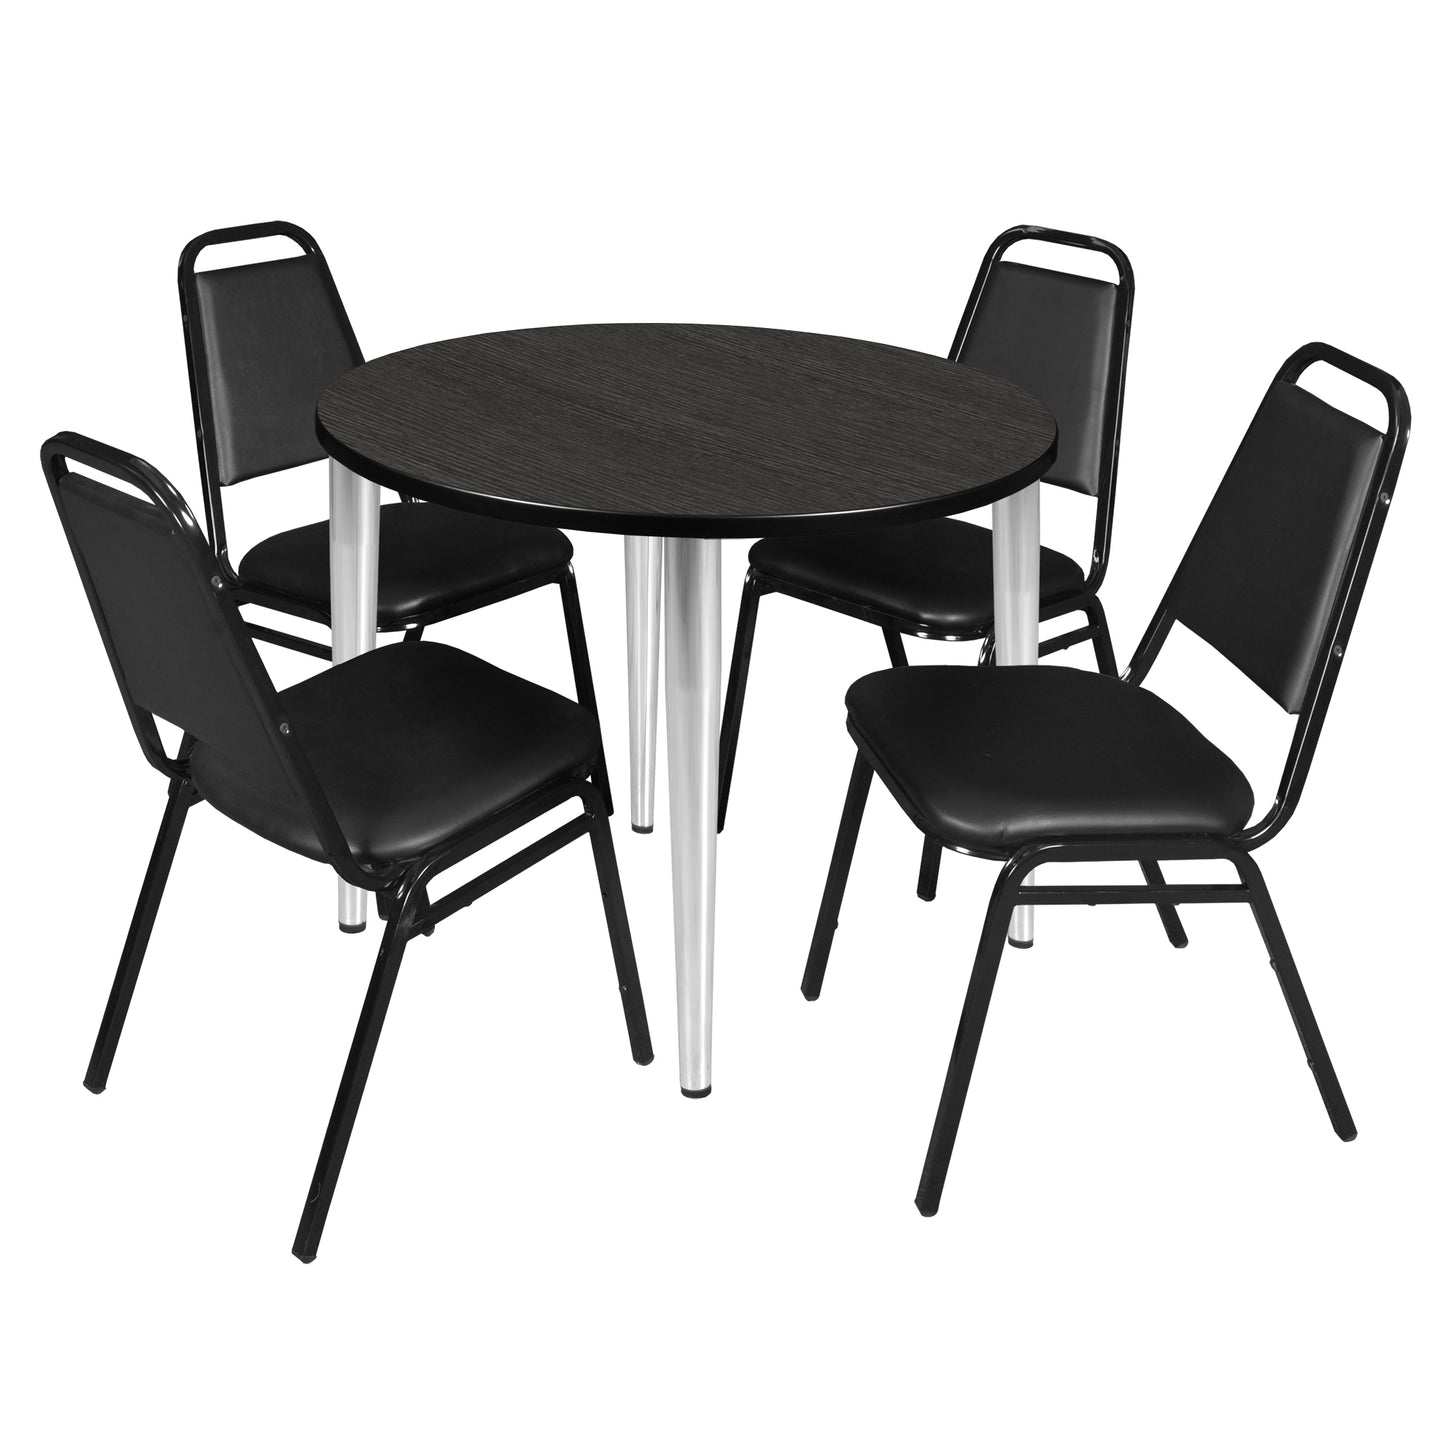 Regency Kahlo 36 in. Round Breakroom Table & 4 Restaurant Stack Chairs - Black